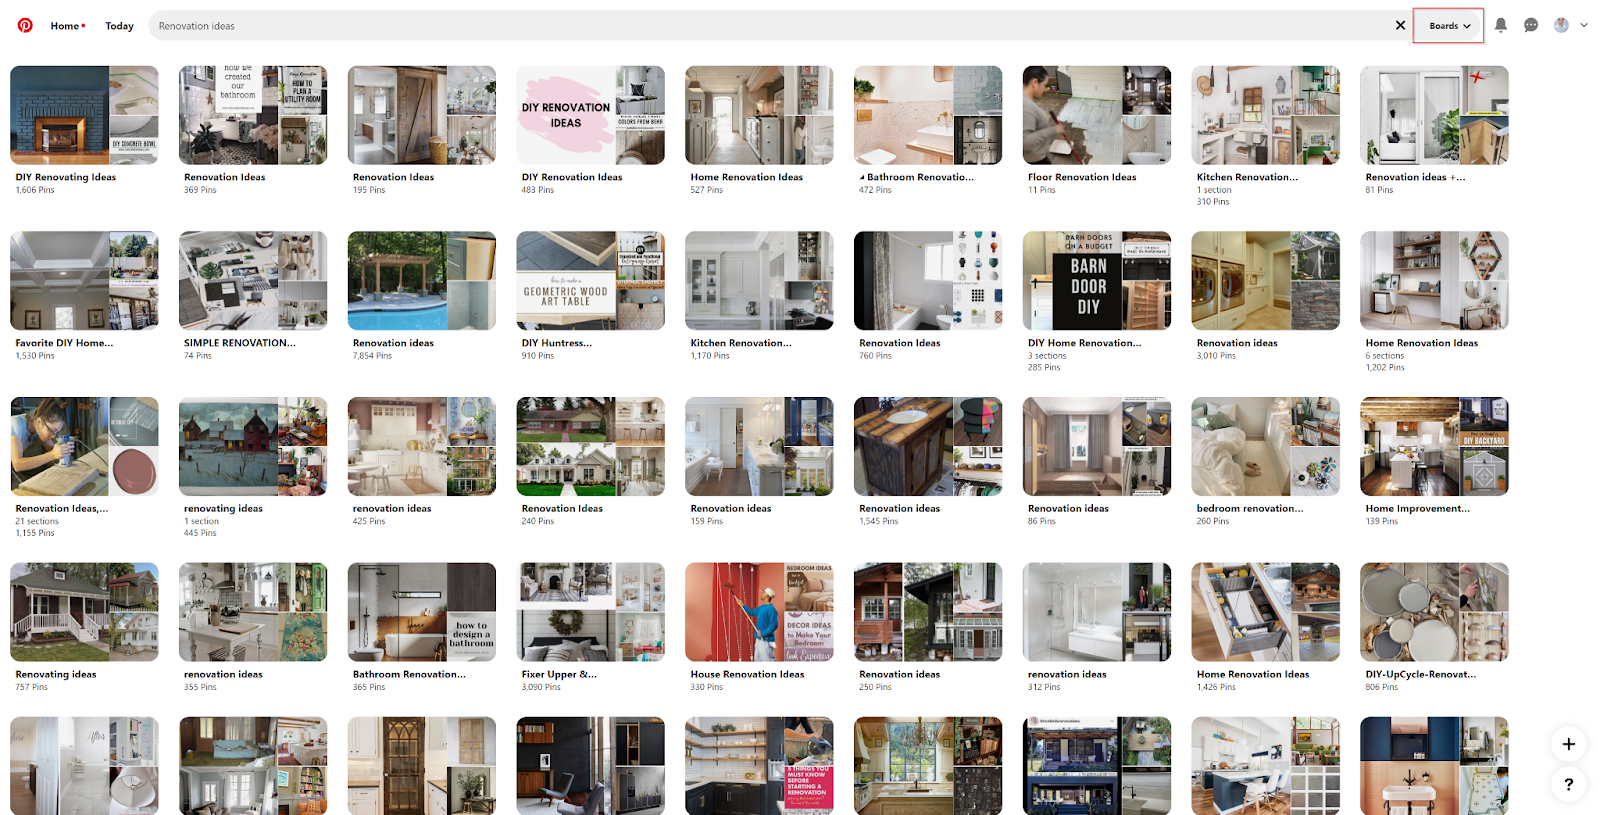 Pinterest Boards for renovation ideas